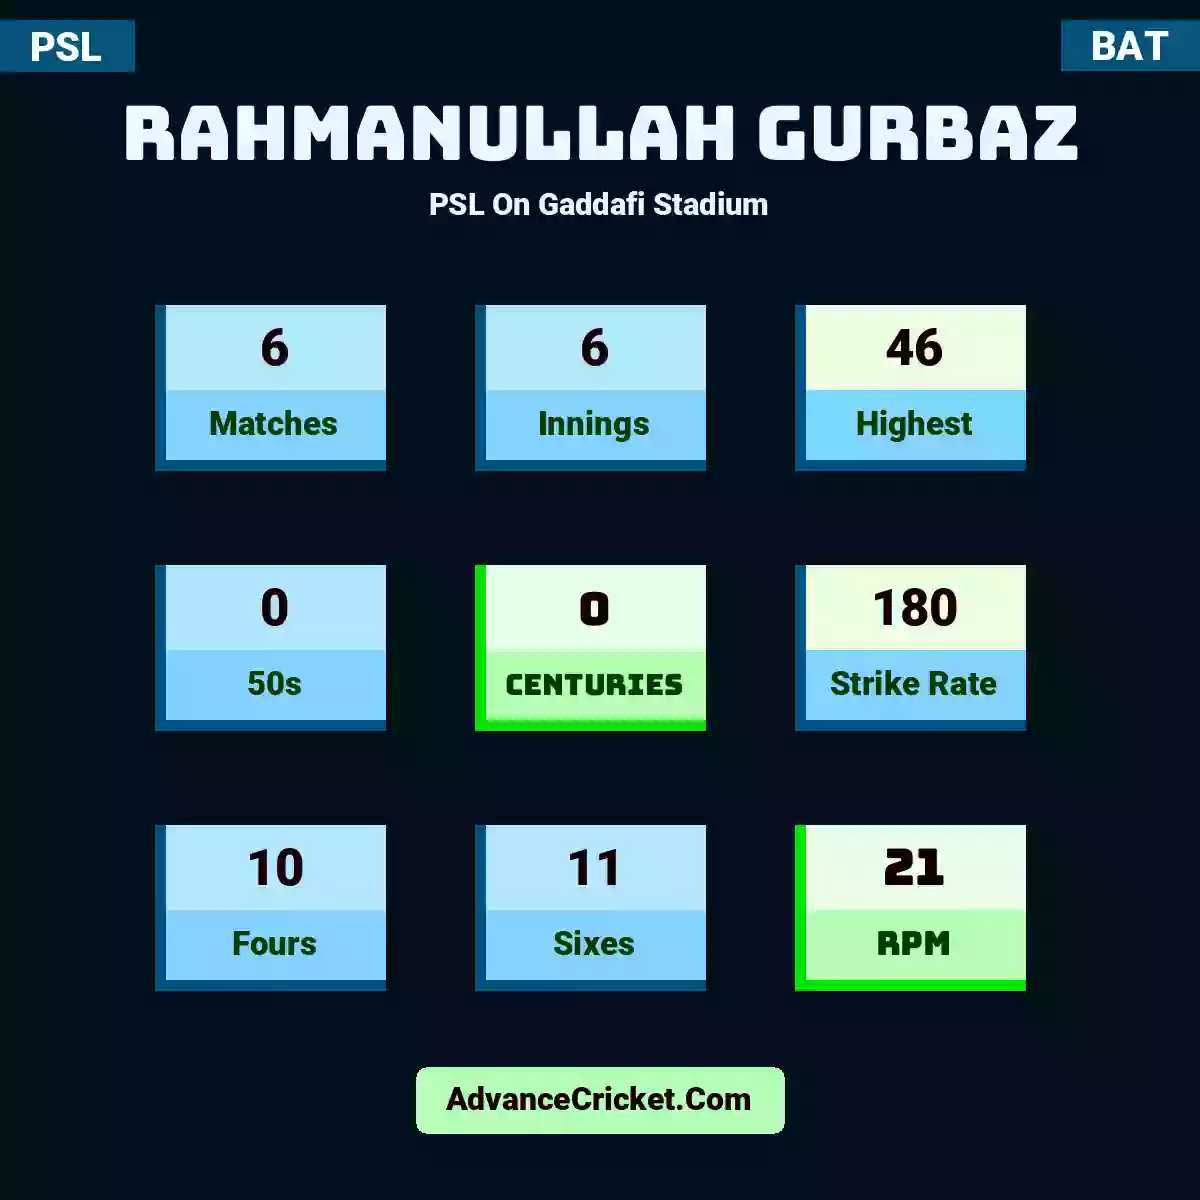 Rahmanullah Gurbaz PSL  On Gaddafi Stadium, Rahmanullah Gurbaz played 6 matches, scored 46 runs as highest, 0 half-centuries, and 0 centuries, with a strike rate of 180. R.Gurbaz hit 10 fours and 11 sixes, with an RPM of 21.